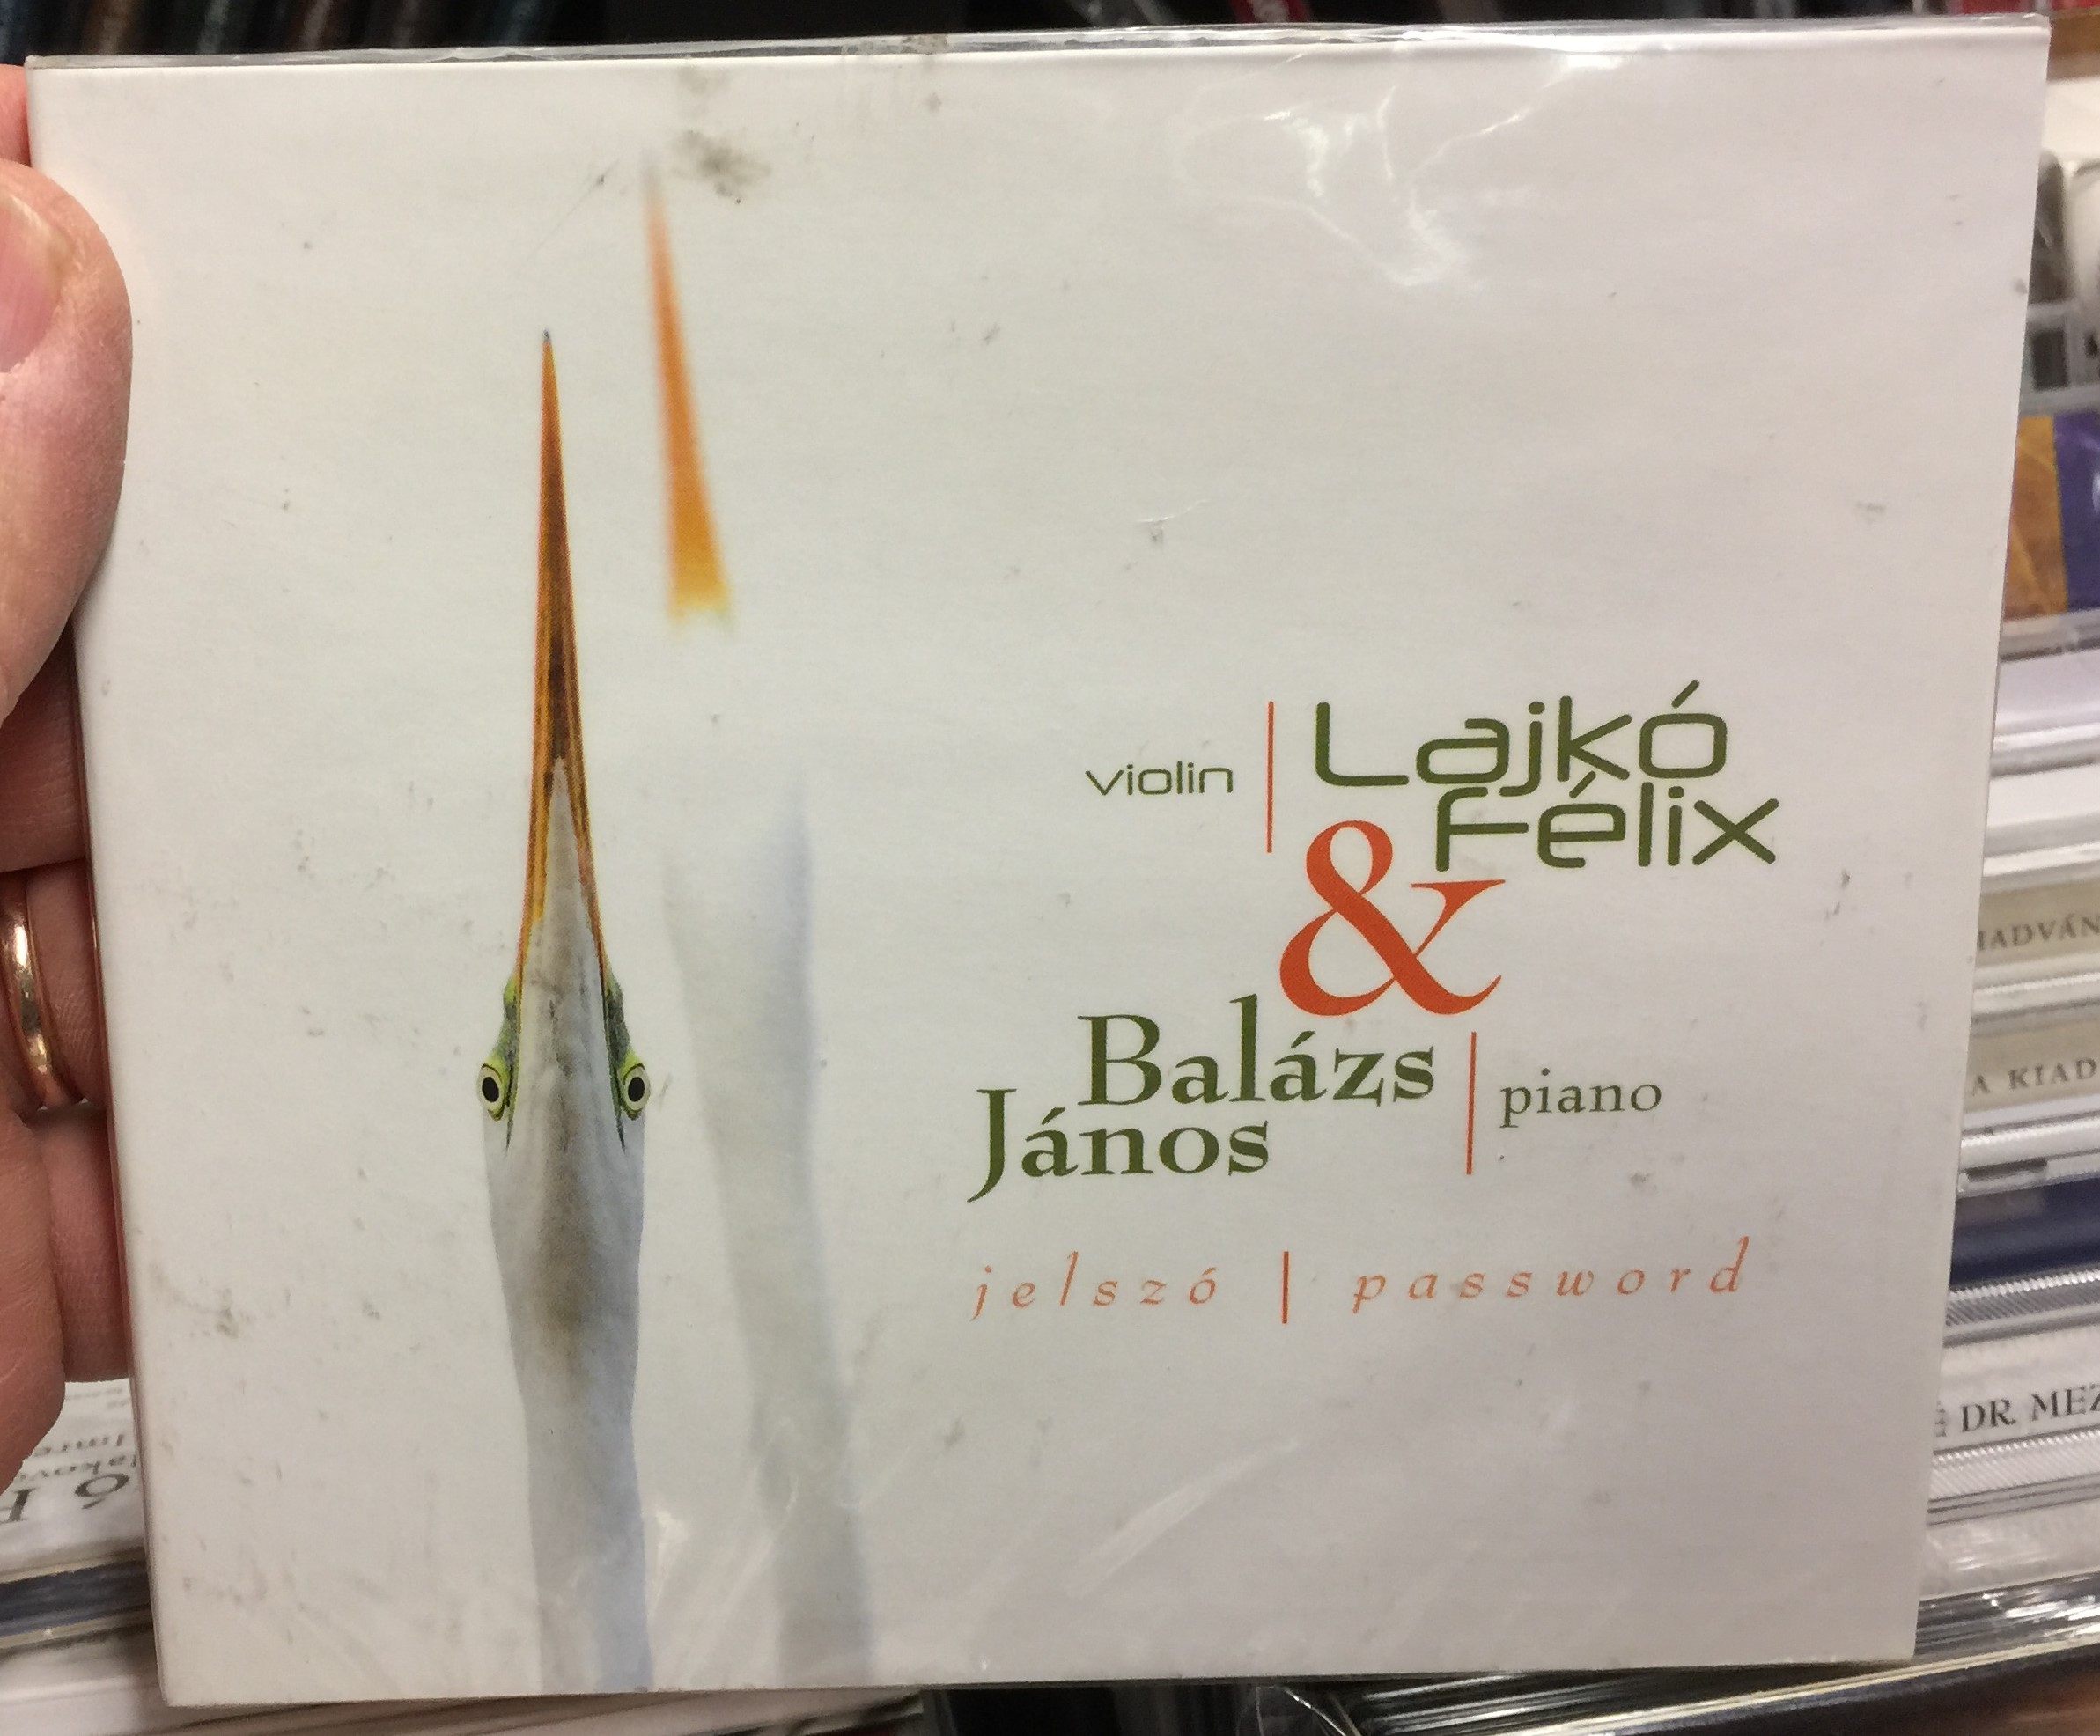 lajk-f-lix-violin-bal-zs-j-nos-piano-jelsz-password-fon-budai-zeneh-z-audio-cd-2014-fa-358-2-1-.jpg